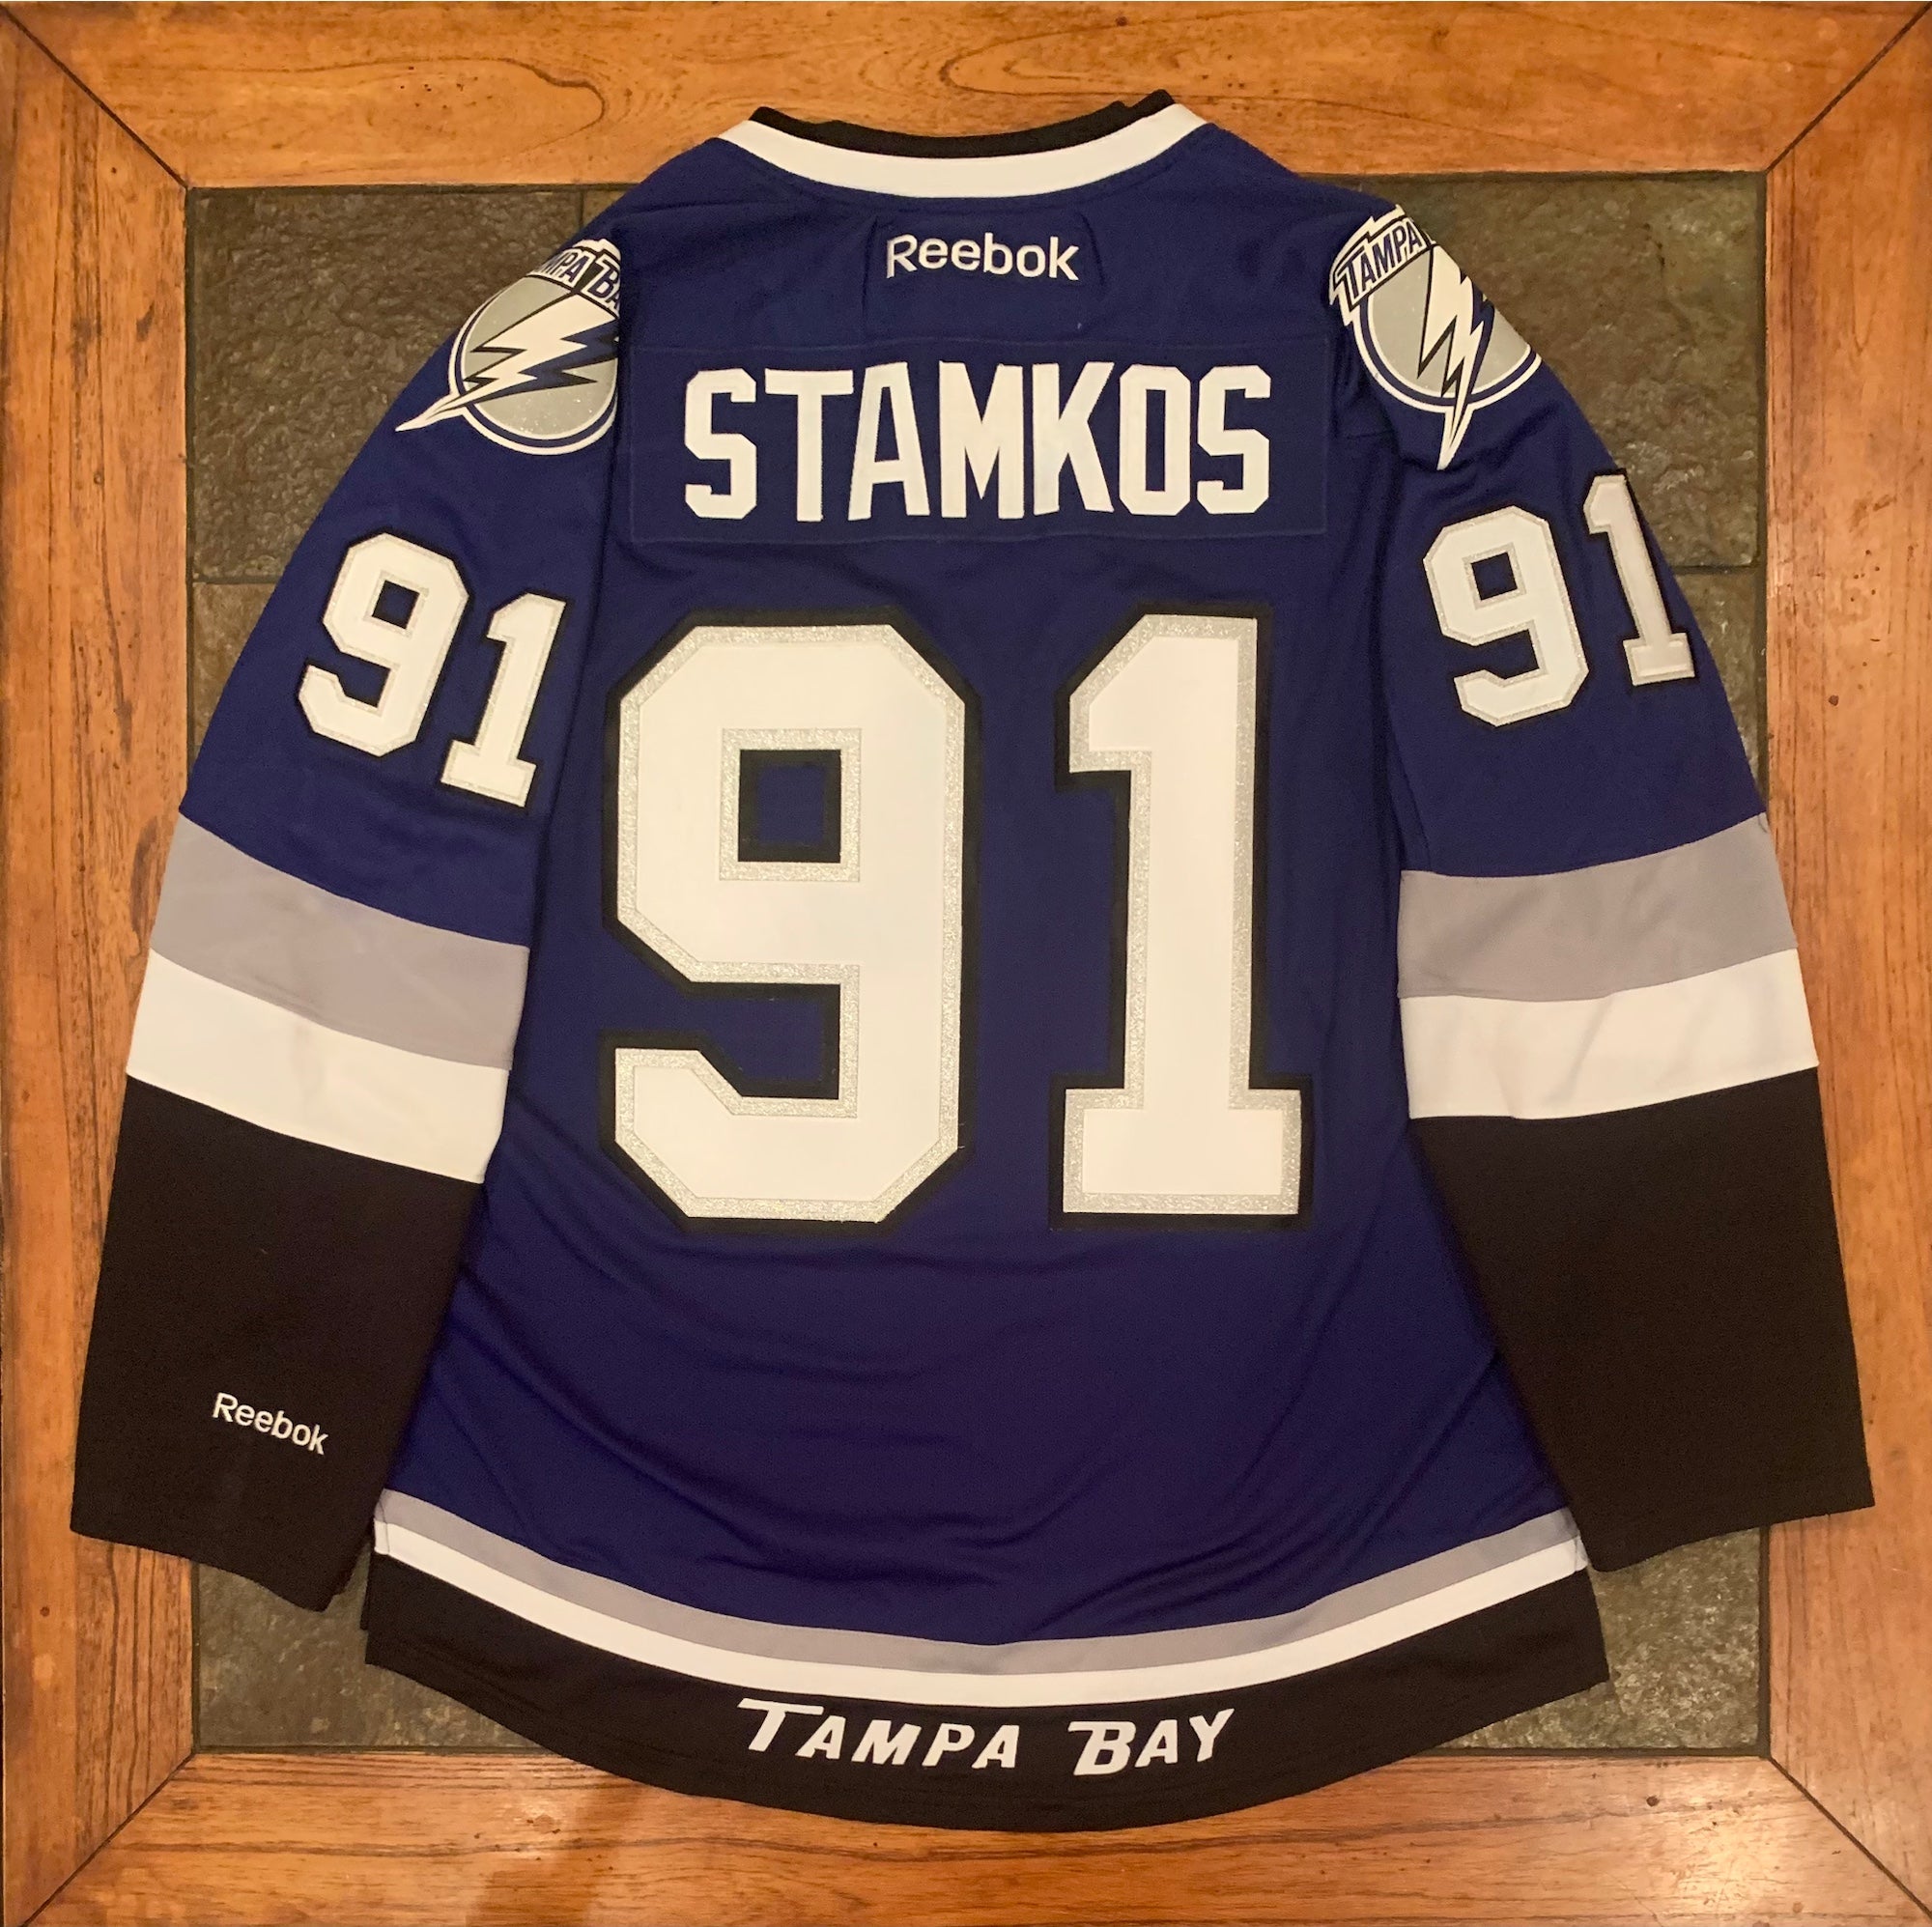 Reebok Steven Stamkos Lightning 2011 NHL All Star Game Fantasy Draft Issued Jersey